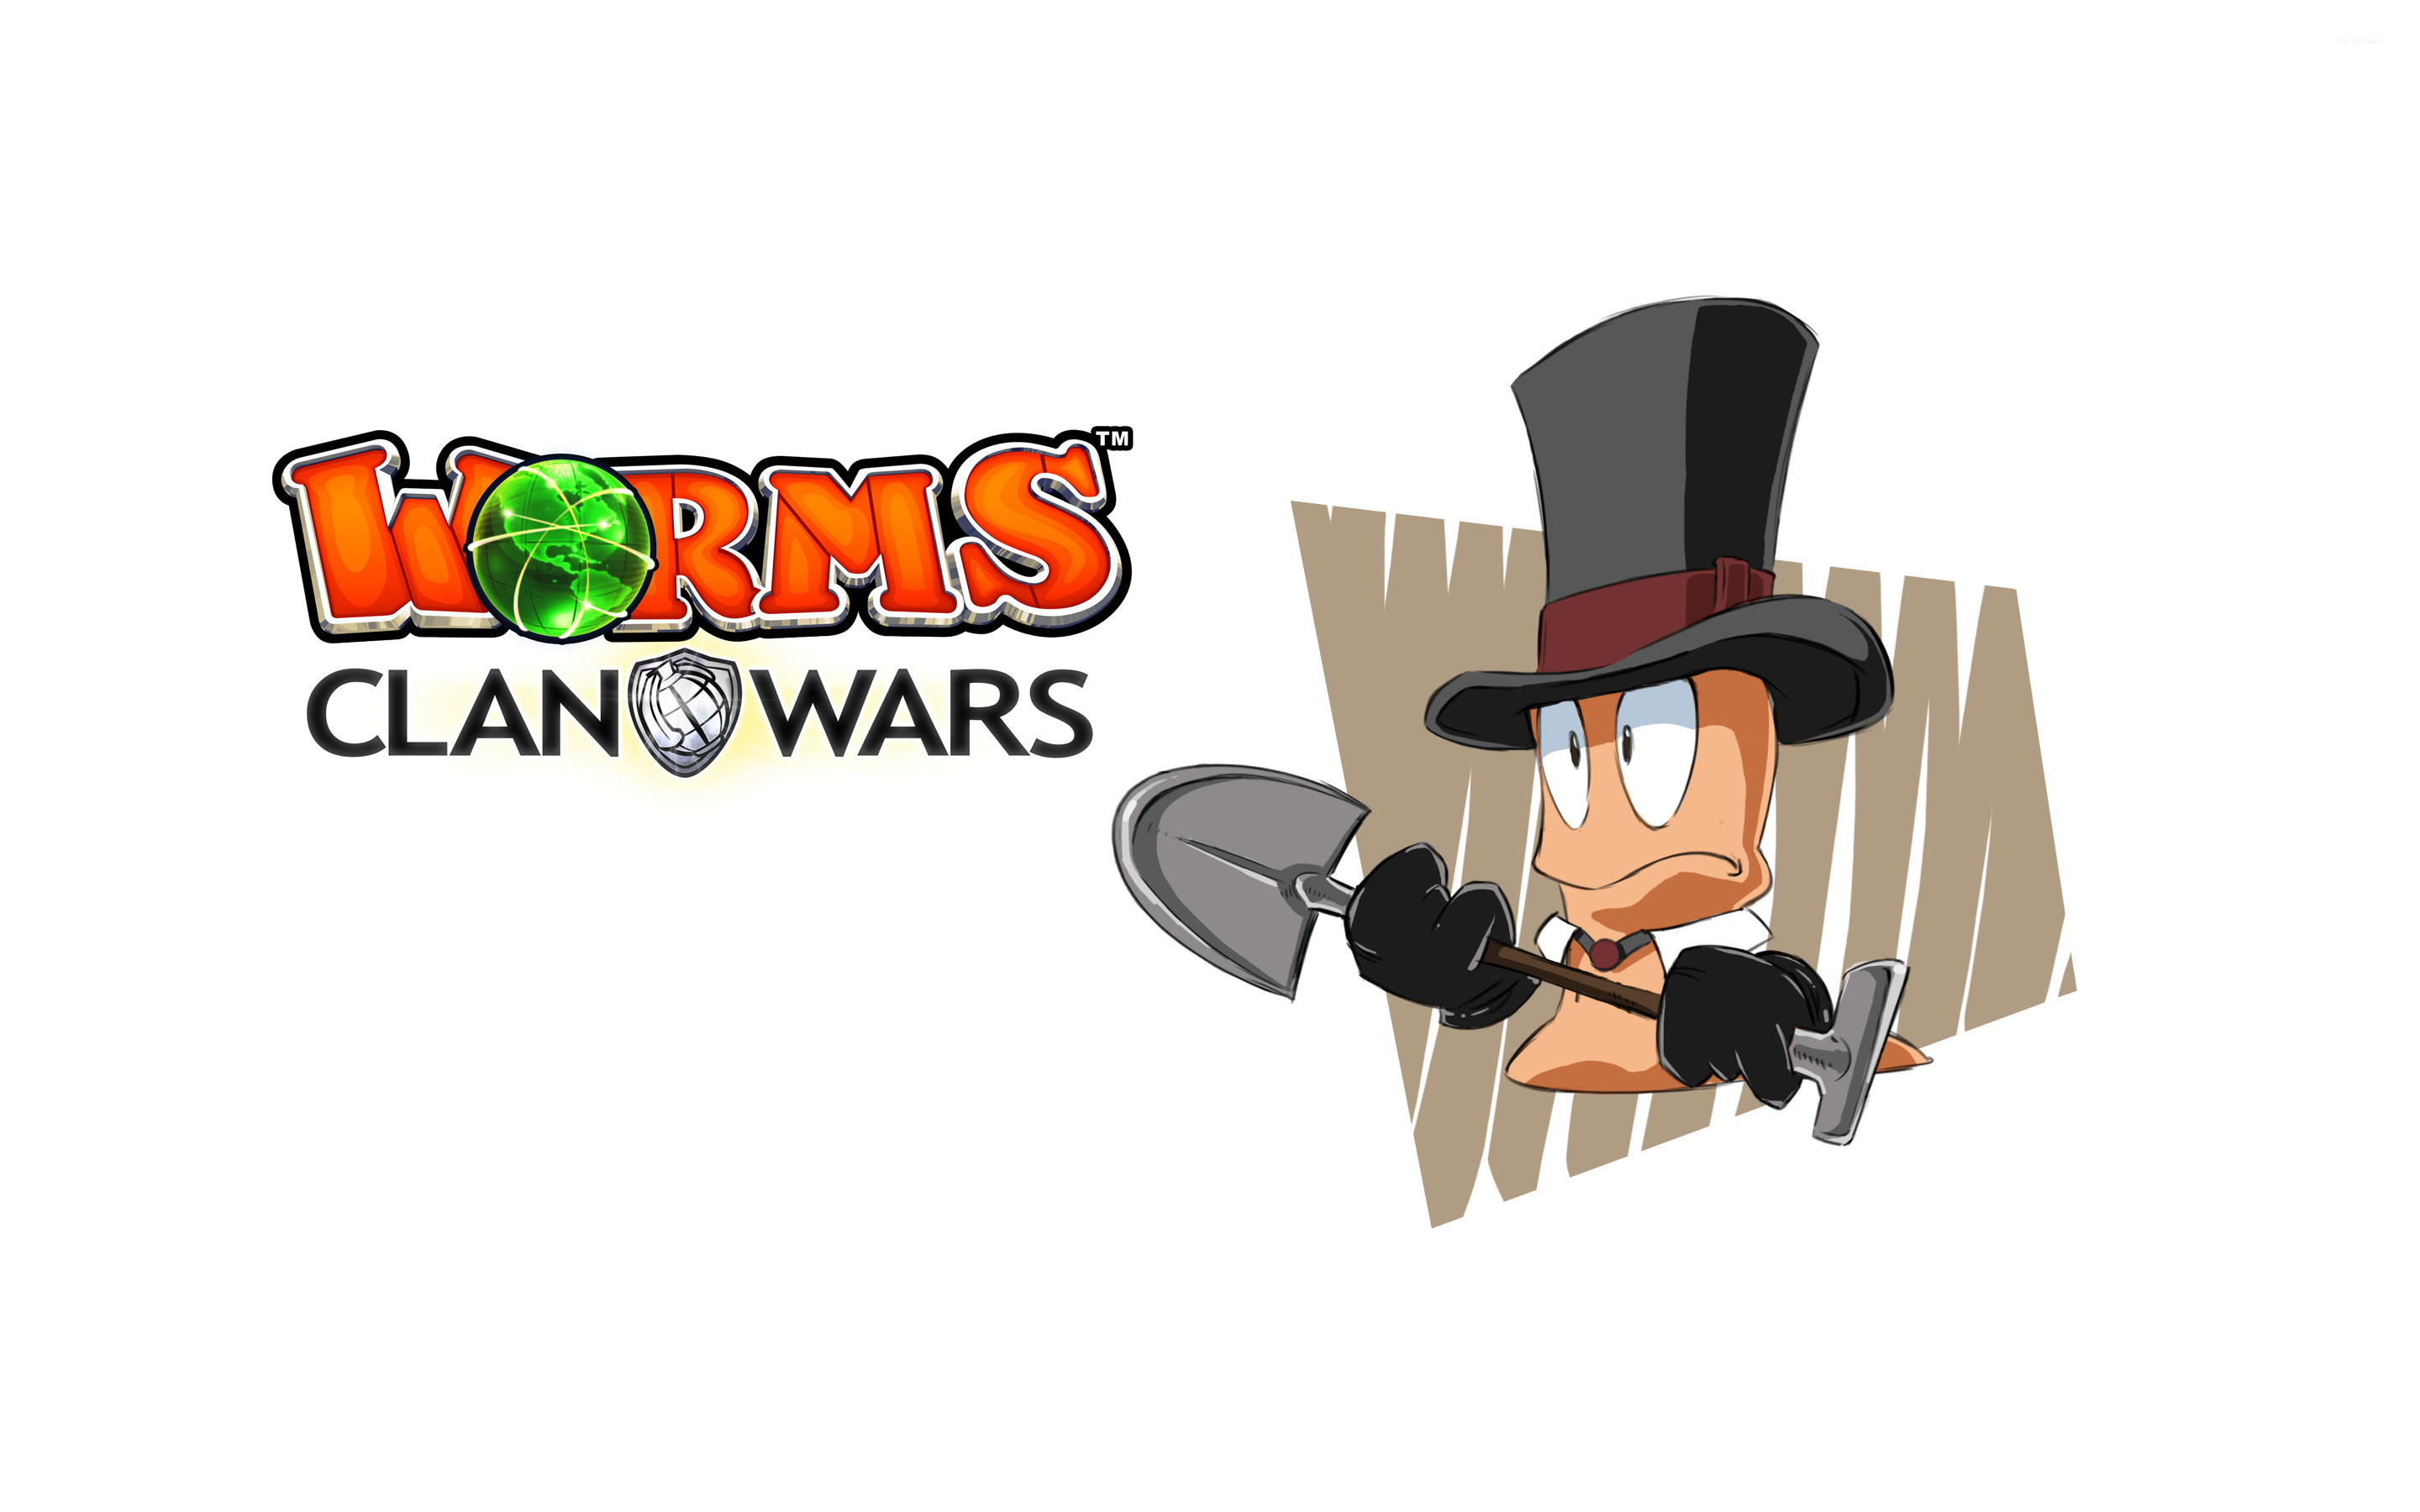 Worms clan. Worms Clan Wars. Worms Clan Wars артиллерийские игры. Worms Clan Wars 3d. Вормс клан ВАРС 1.